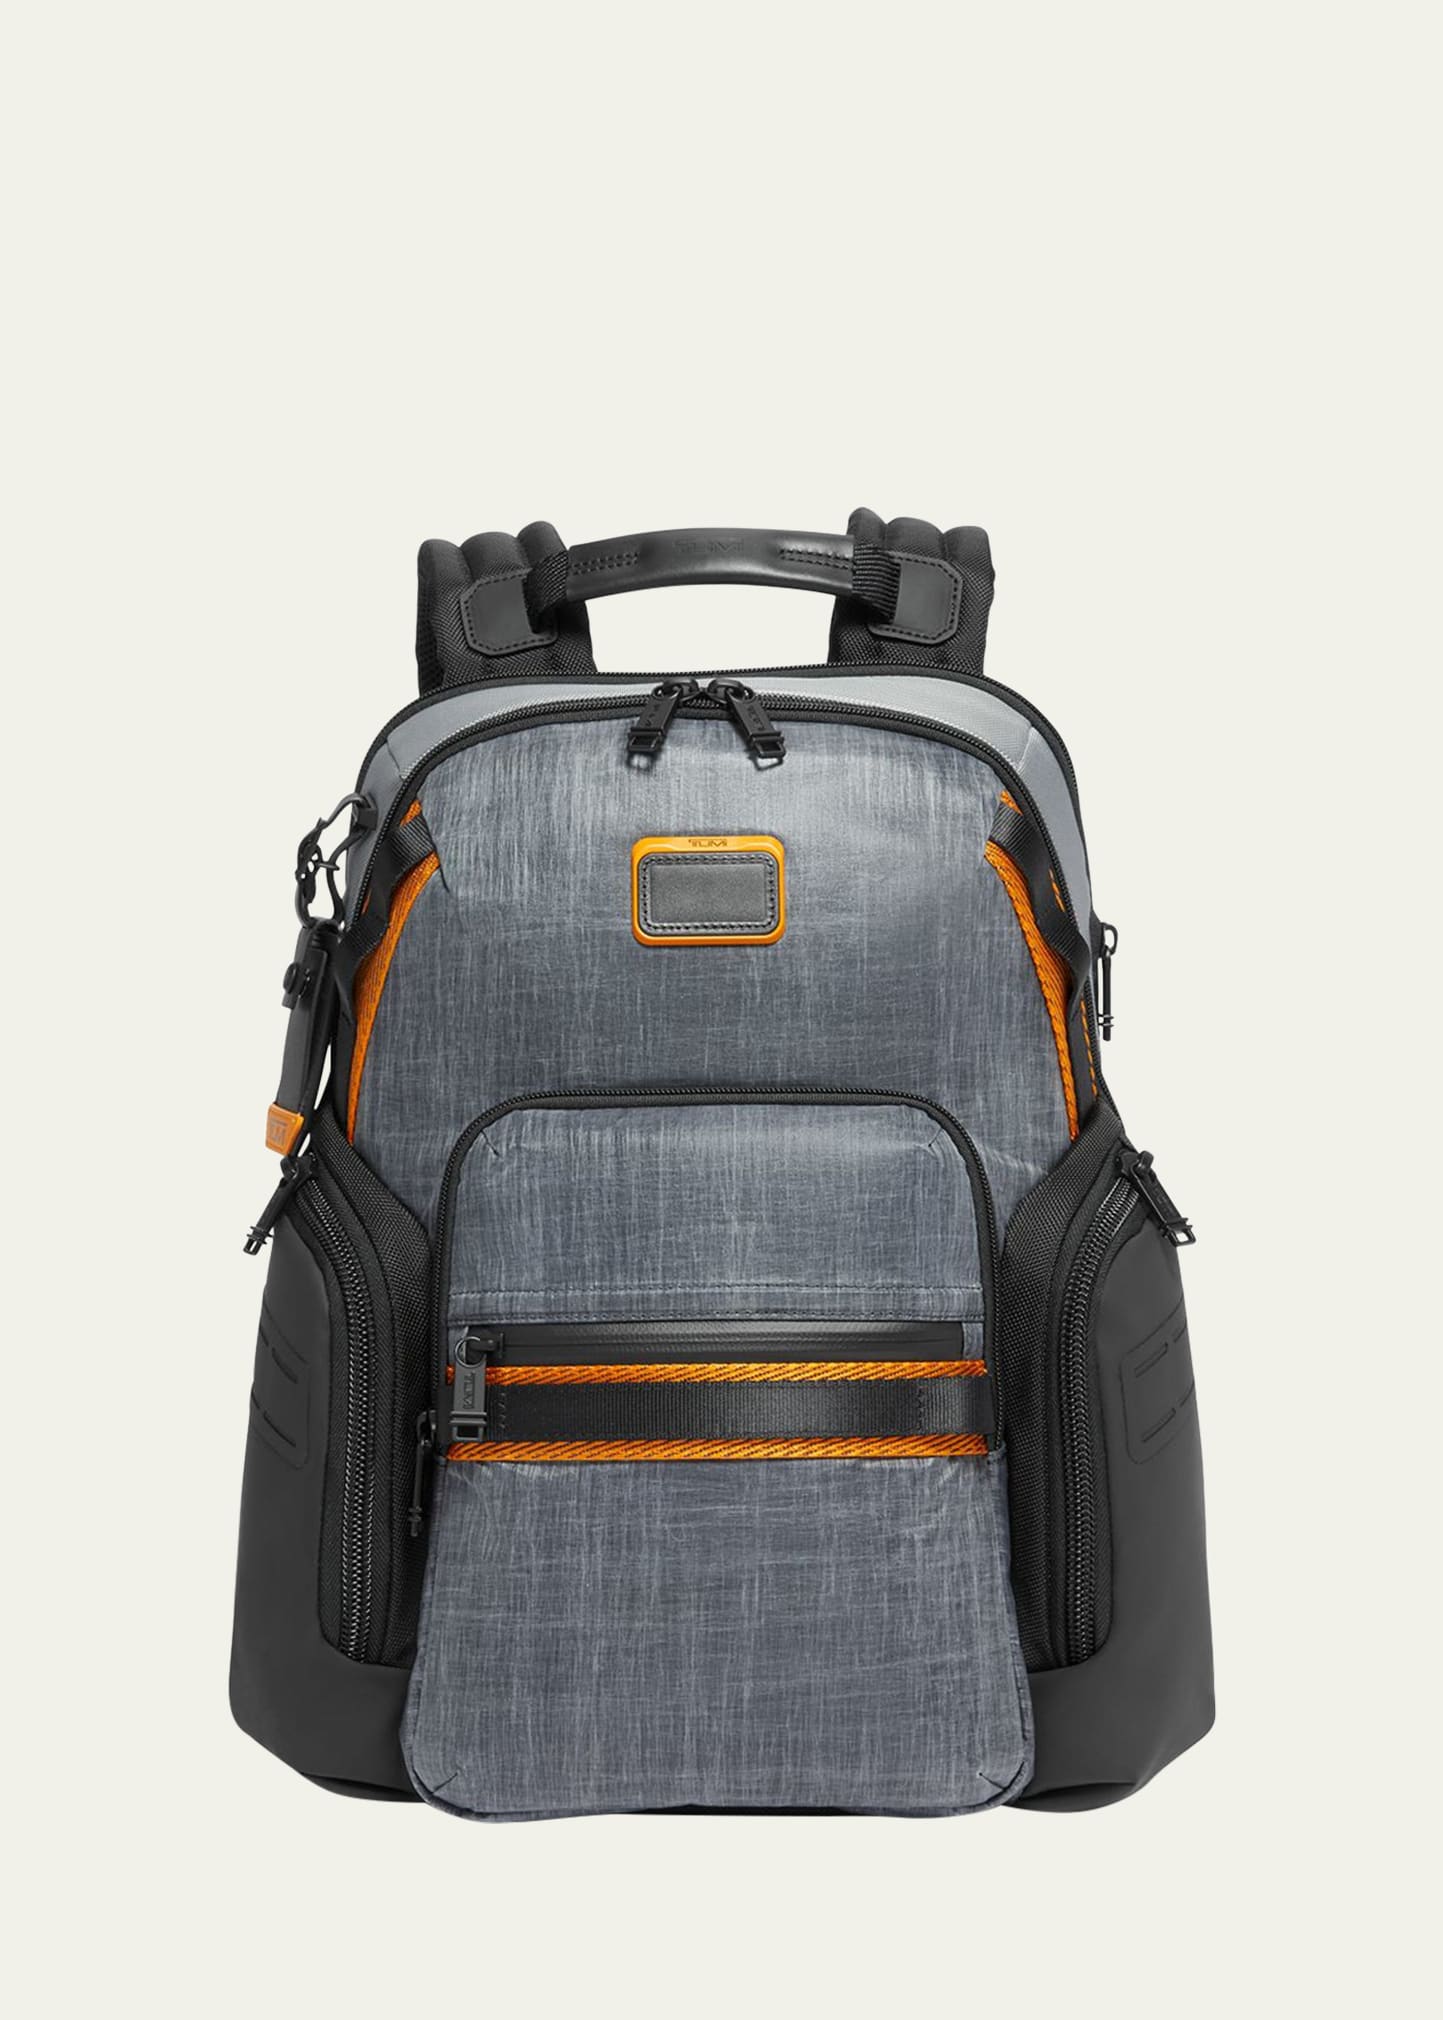 International 2 Wheeled Duffel Backpack Carry-On